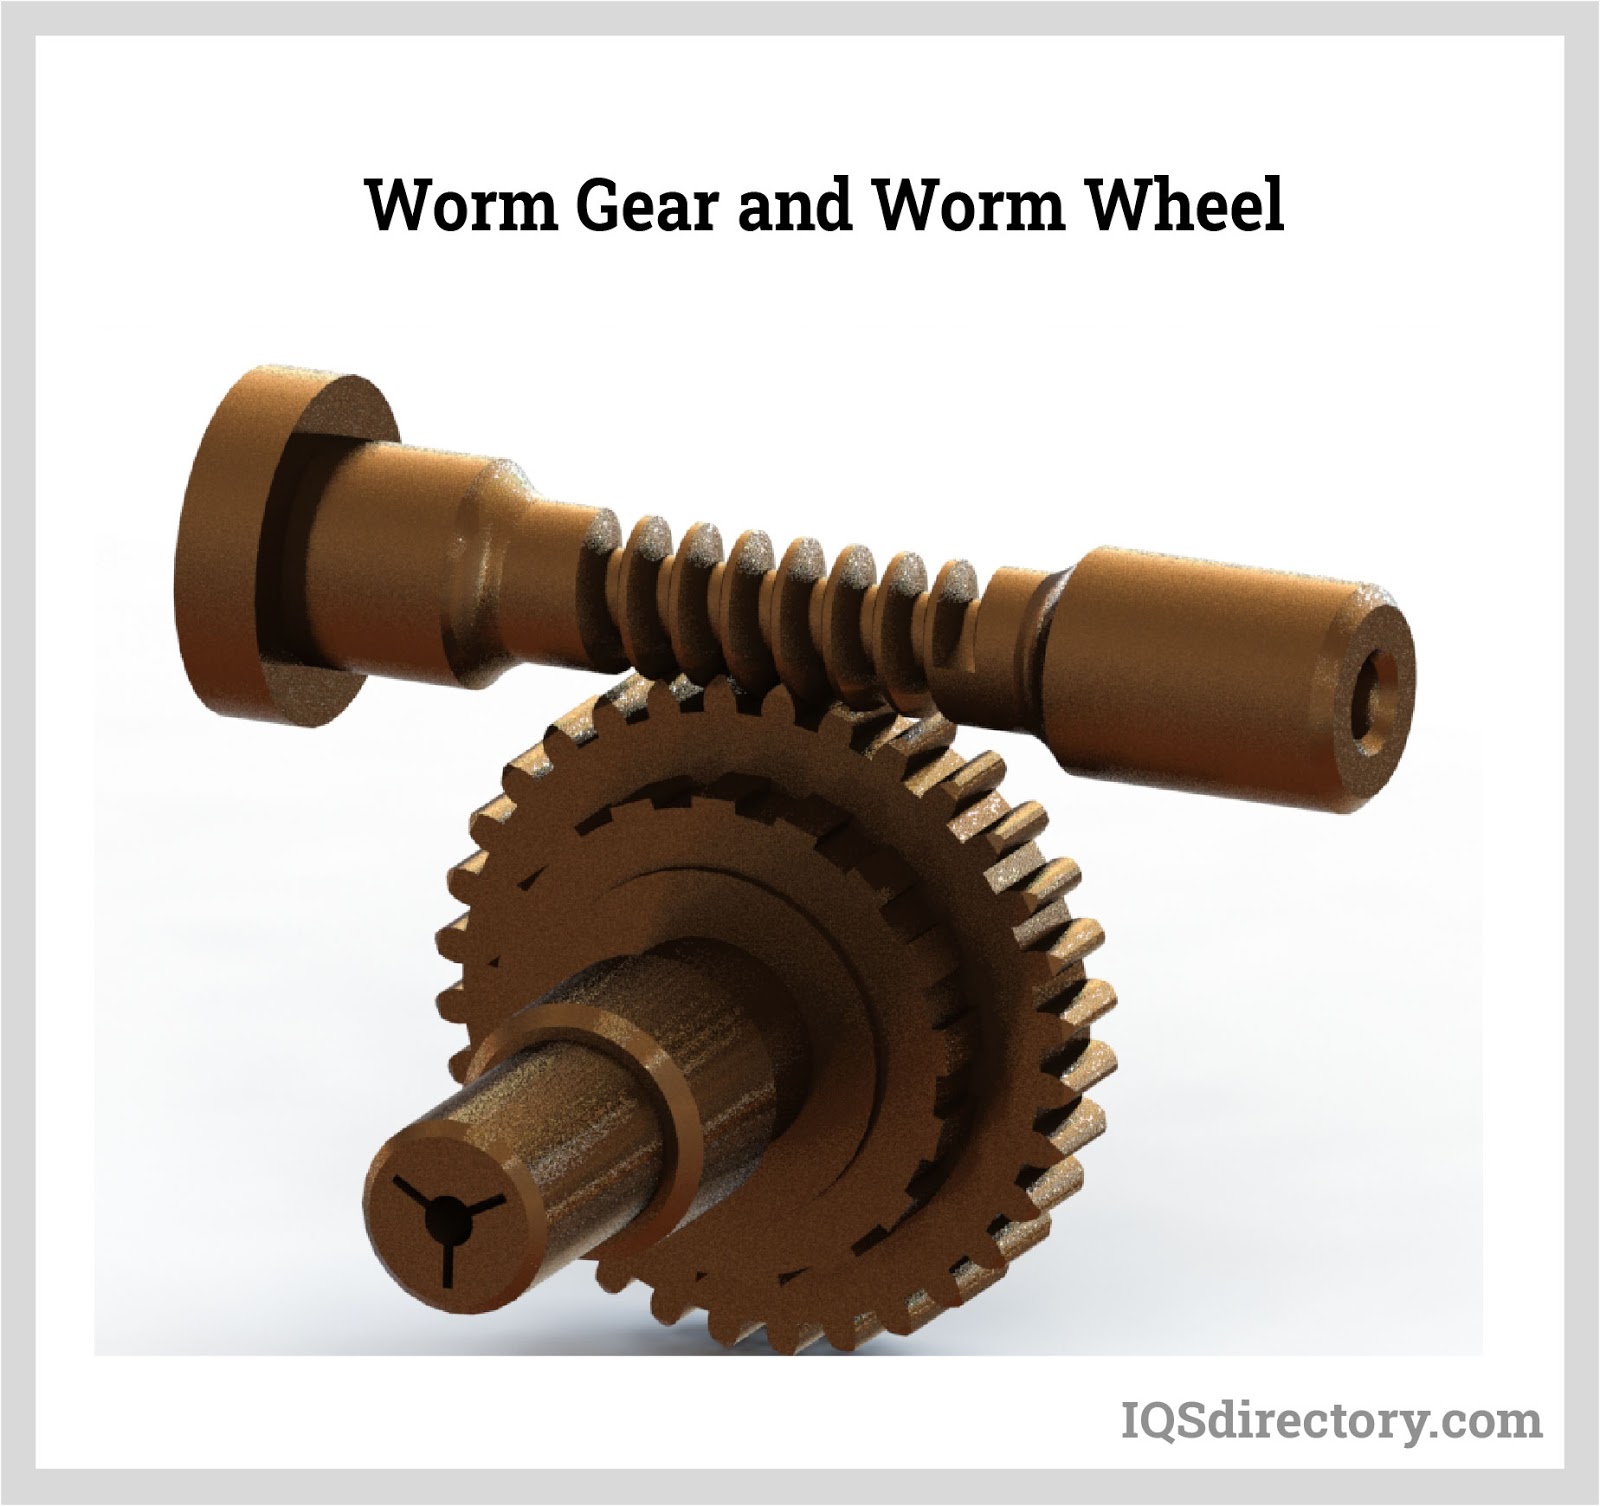 Worm Gear and Worm Wheel